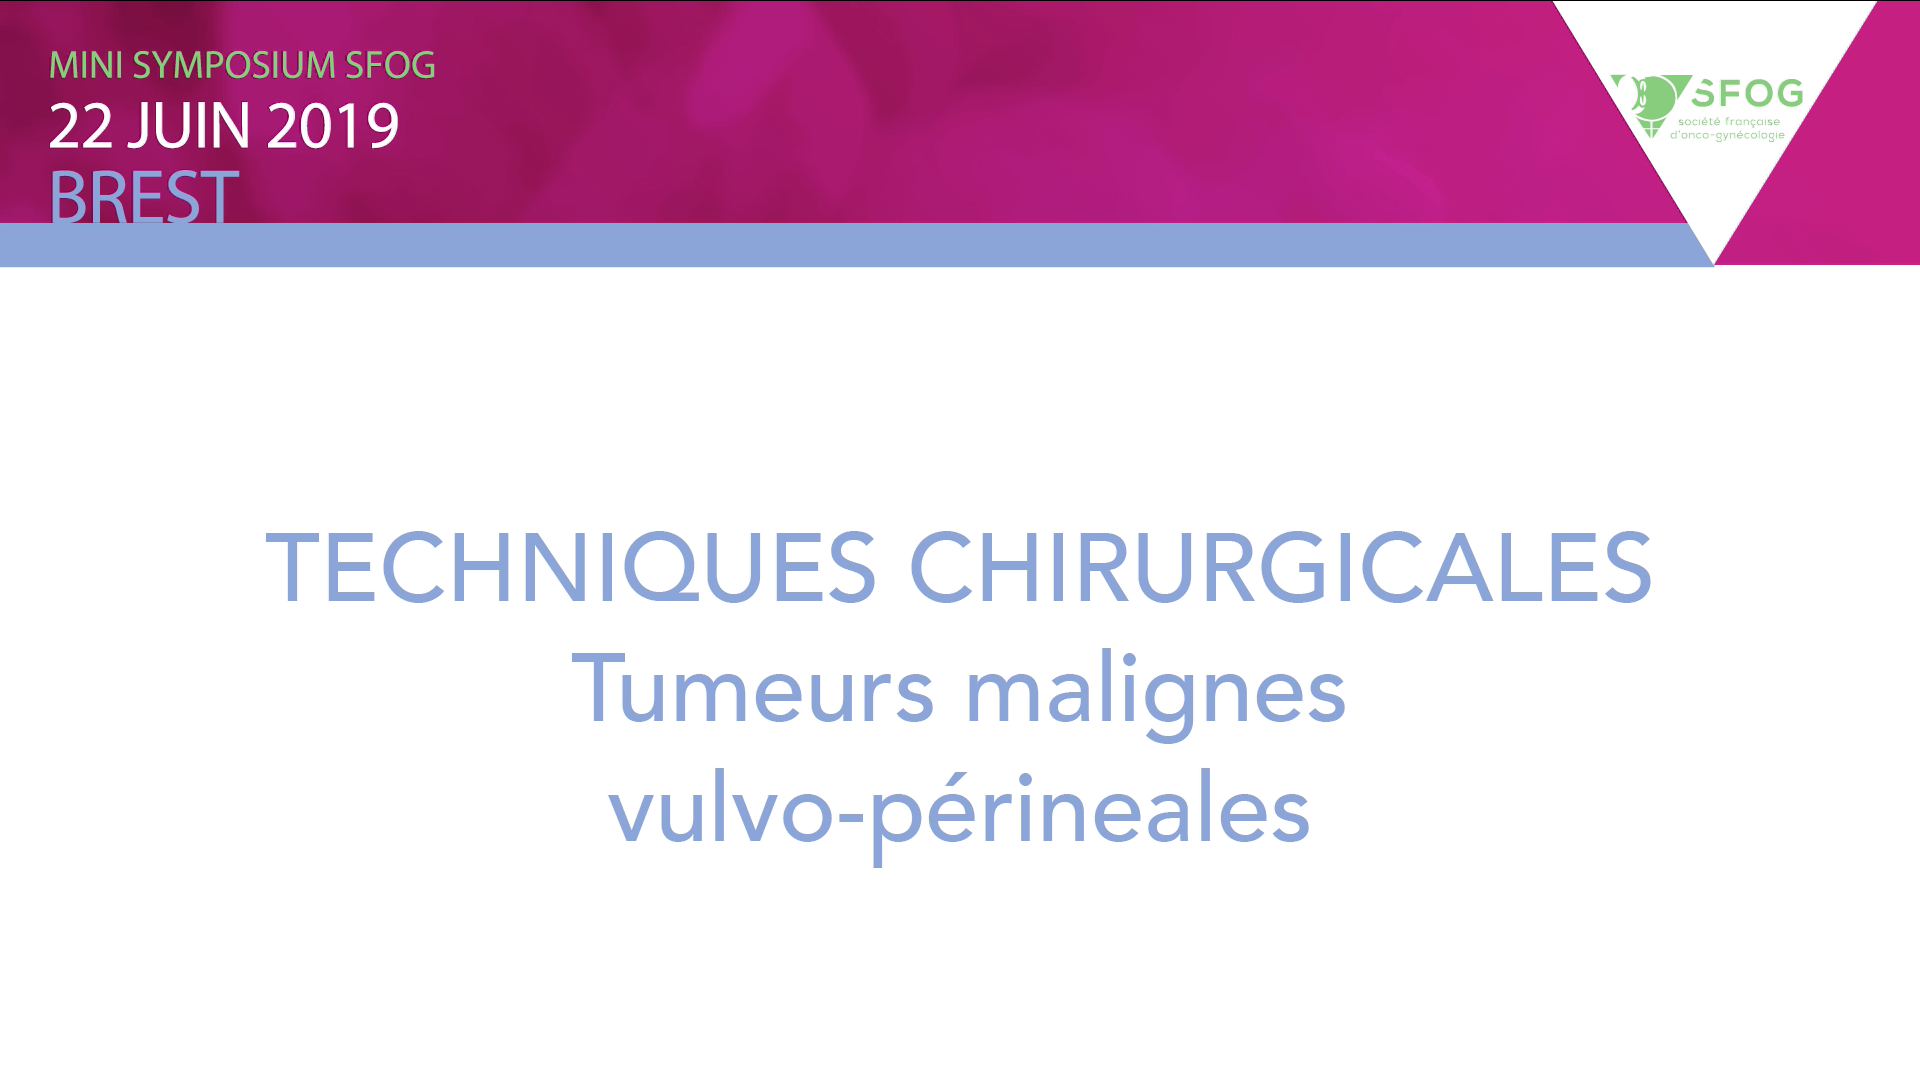 TECHNIQUES CHIRURGICALES : Tumeurs malignes vulvo-périneales